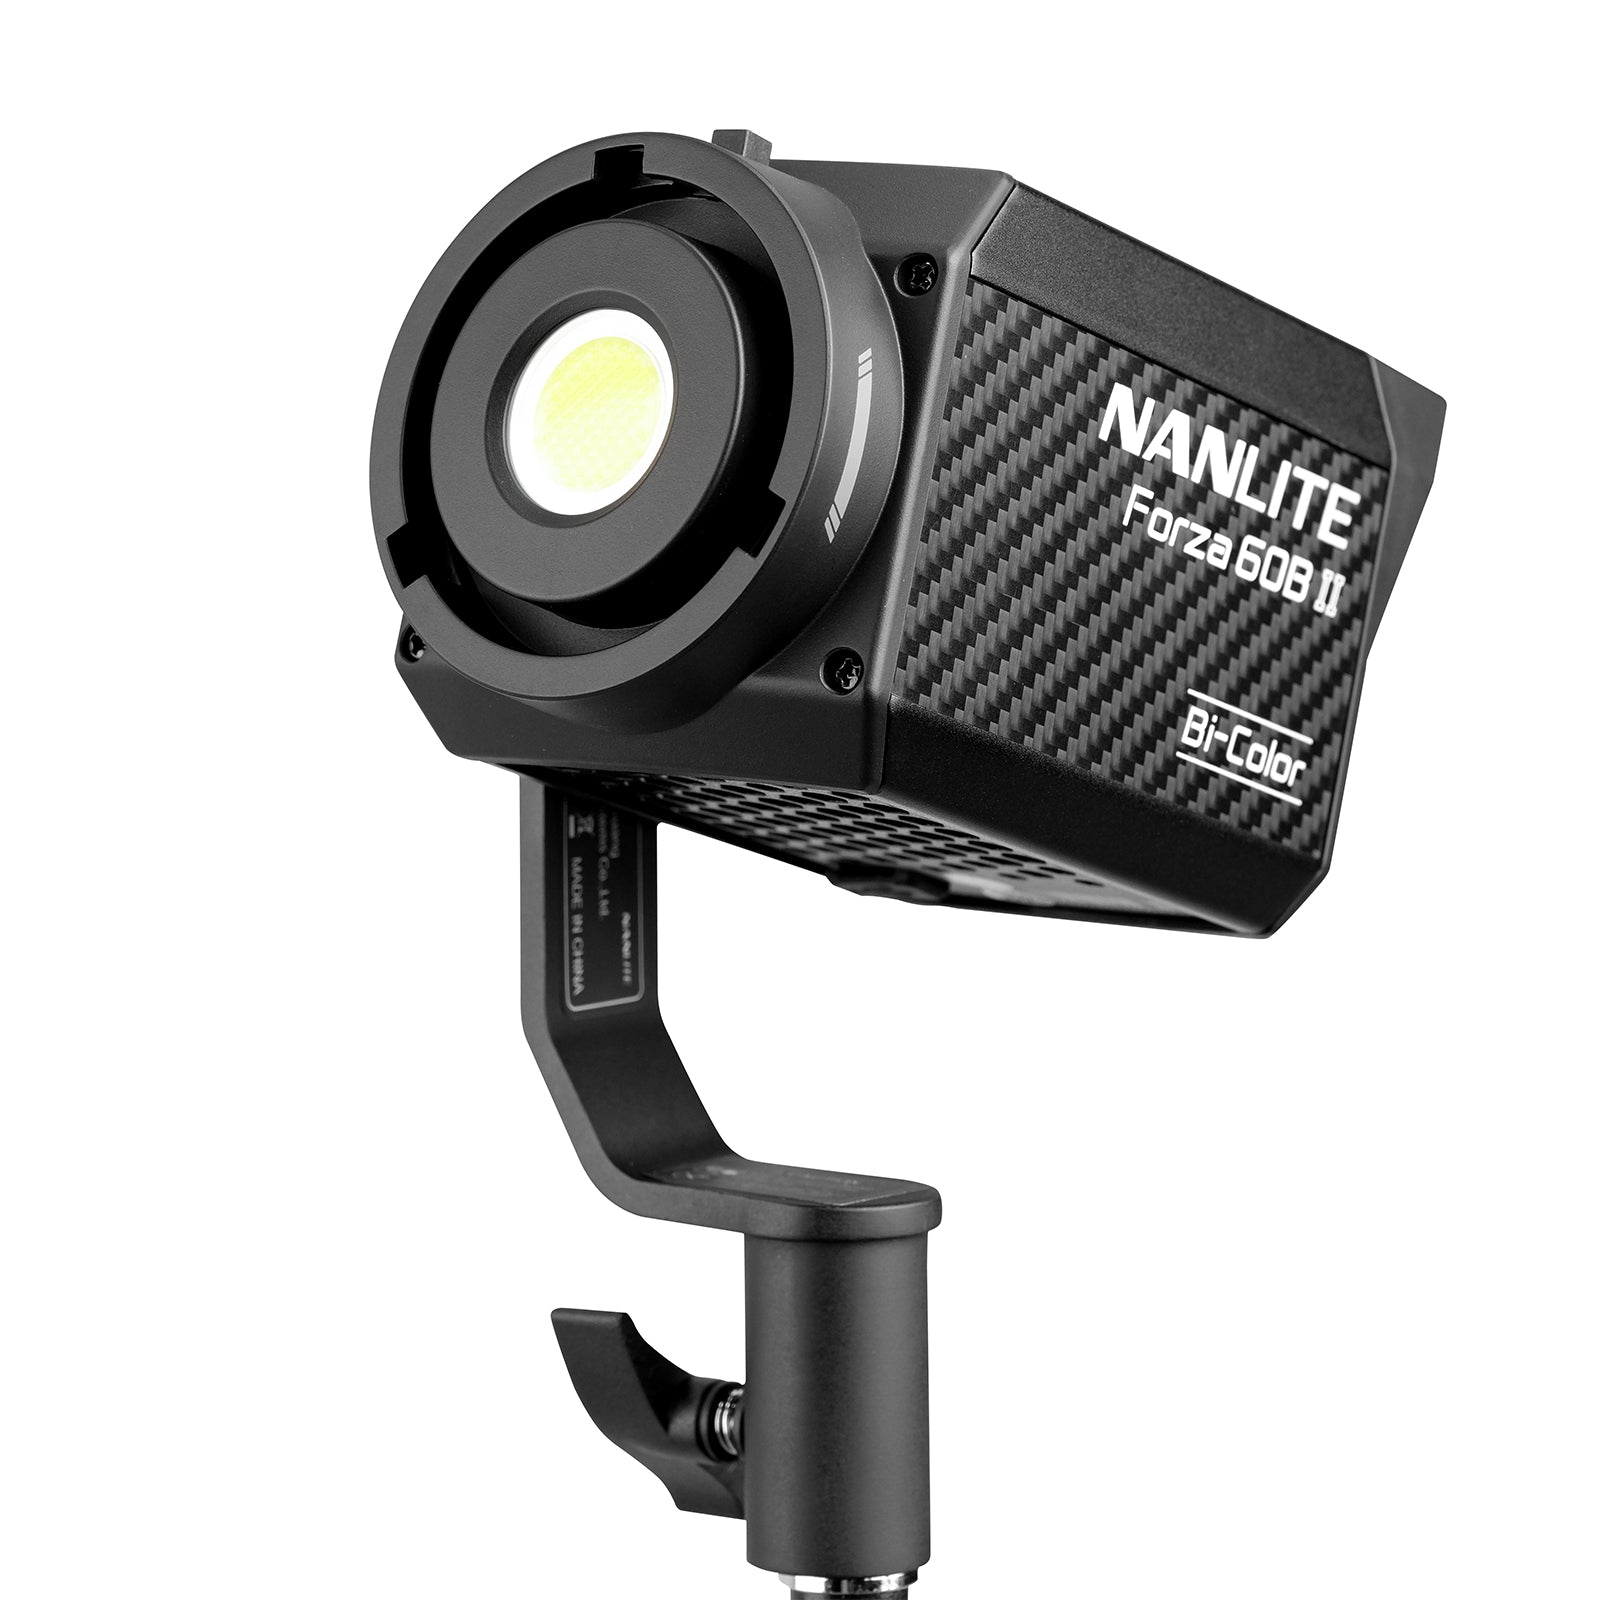 NANLITE Forza 60B II 撮影用ライト スタジオライト LEDライト バイ 